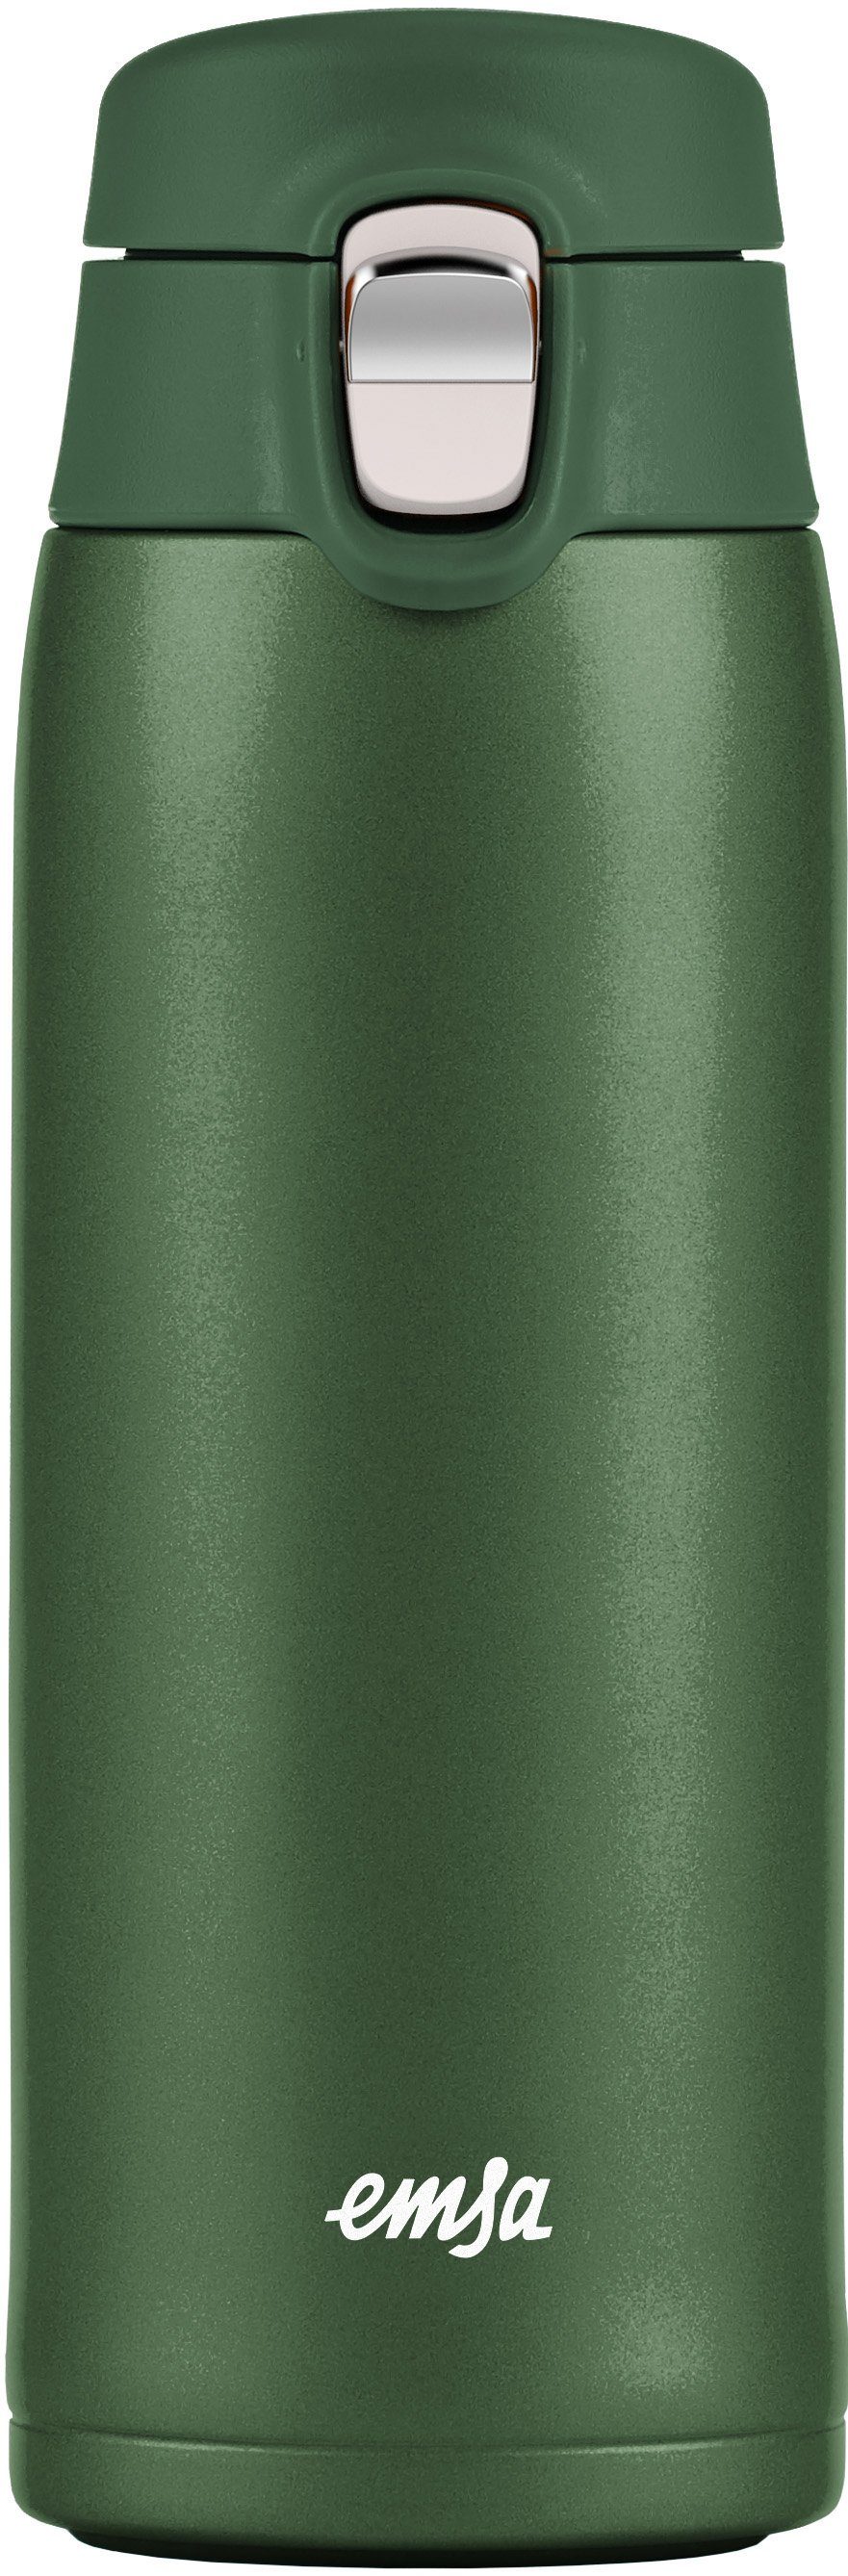 Emsa Thermobecher Travel Mug Light, Edelstahl, Kunststoff, 0,4L, leicht, Edelstahl, Klappverschluss, 100% dicht, 8h heiß/16h kalt